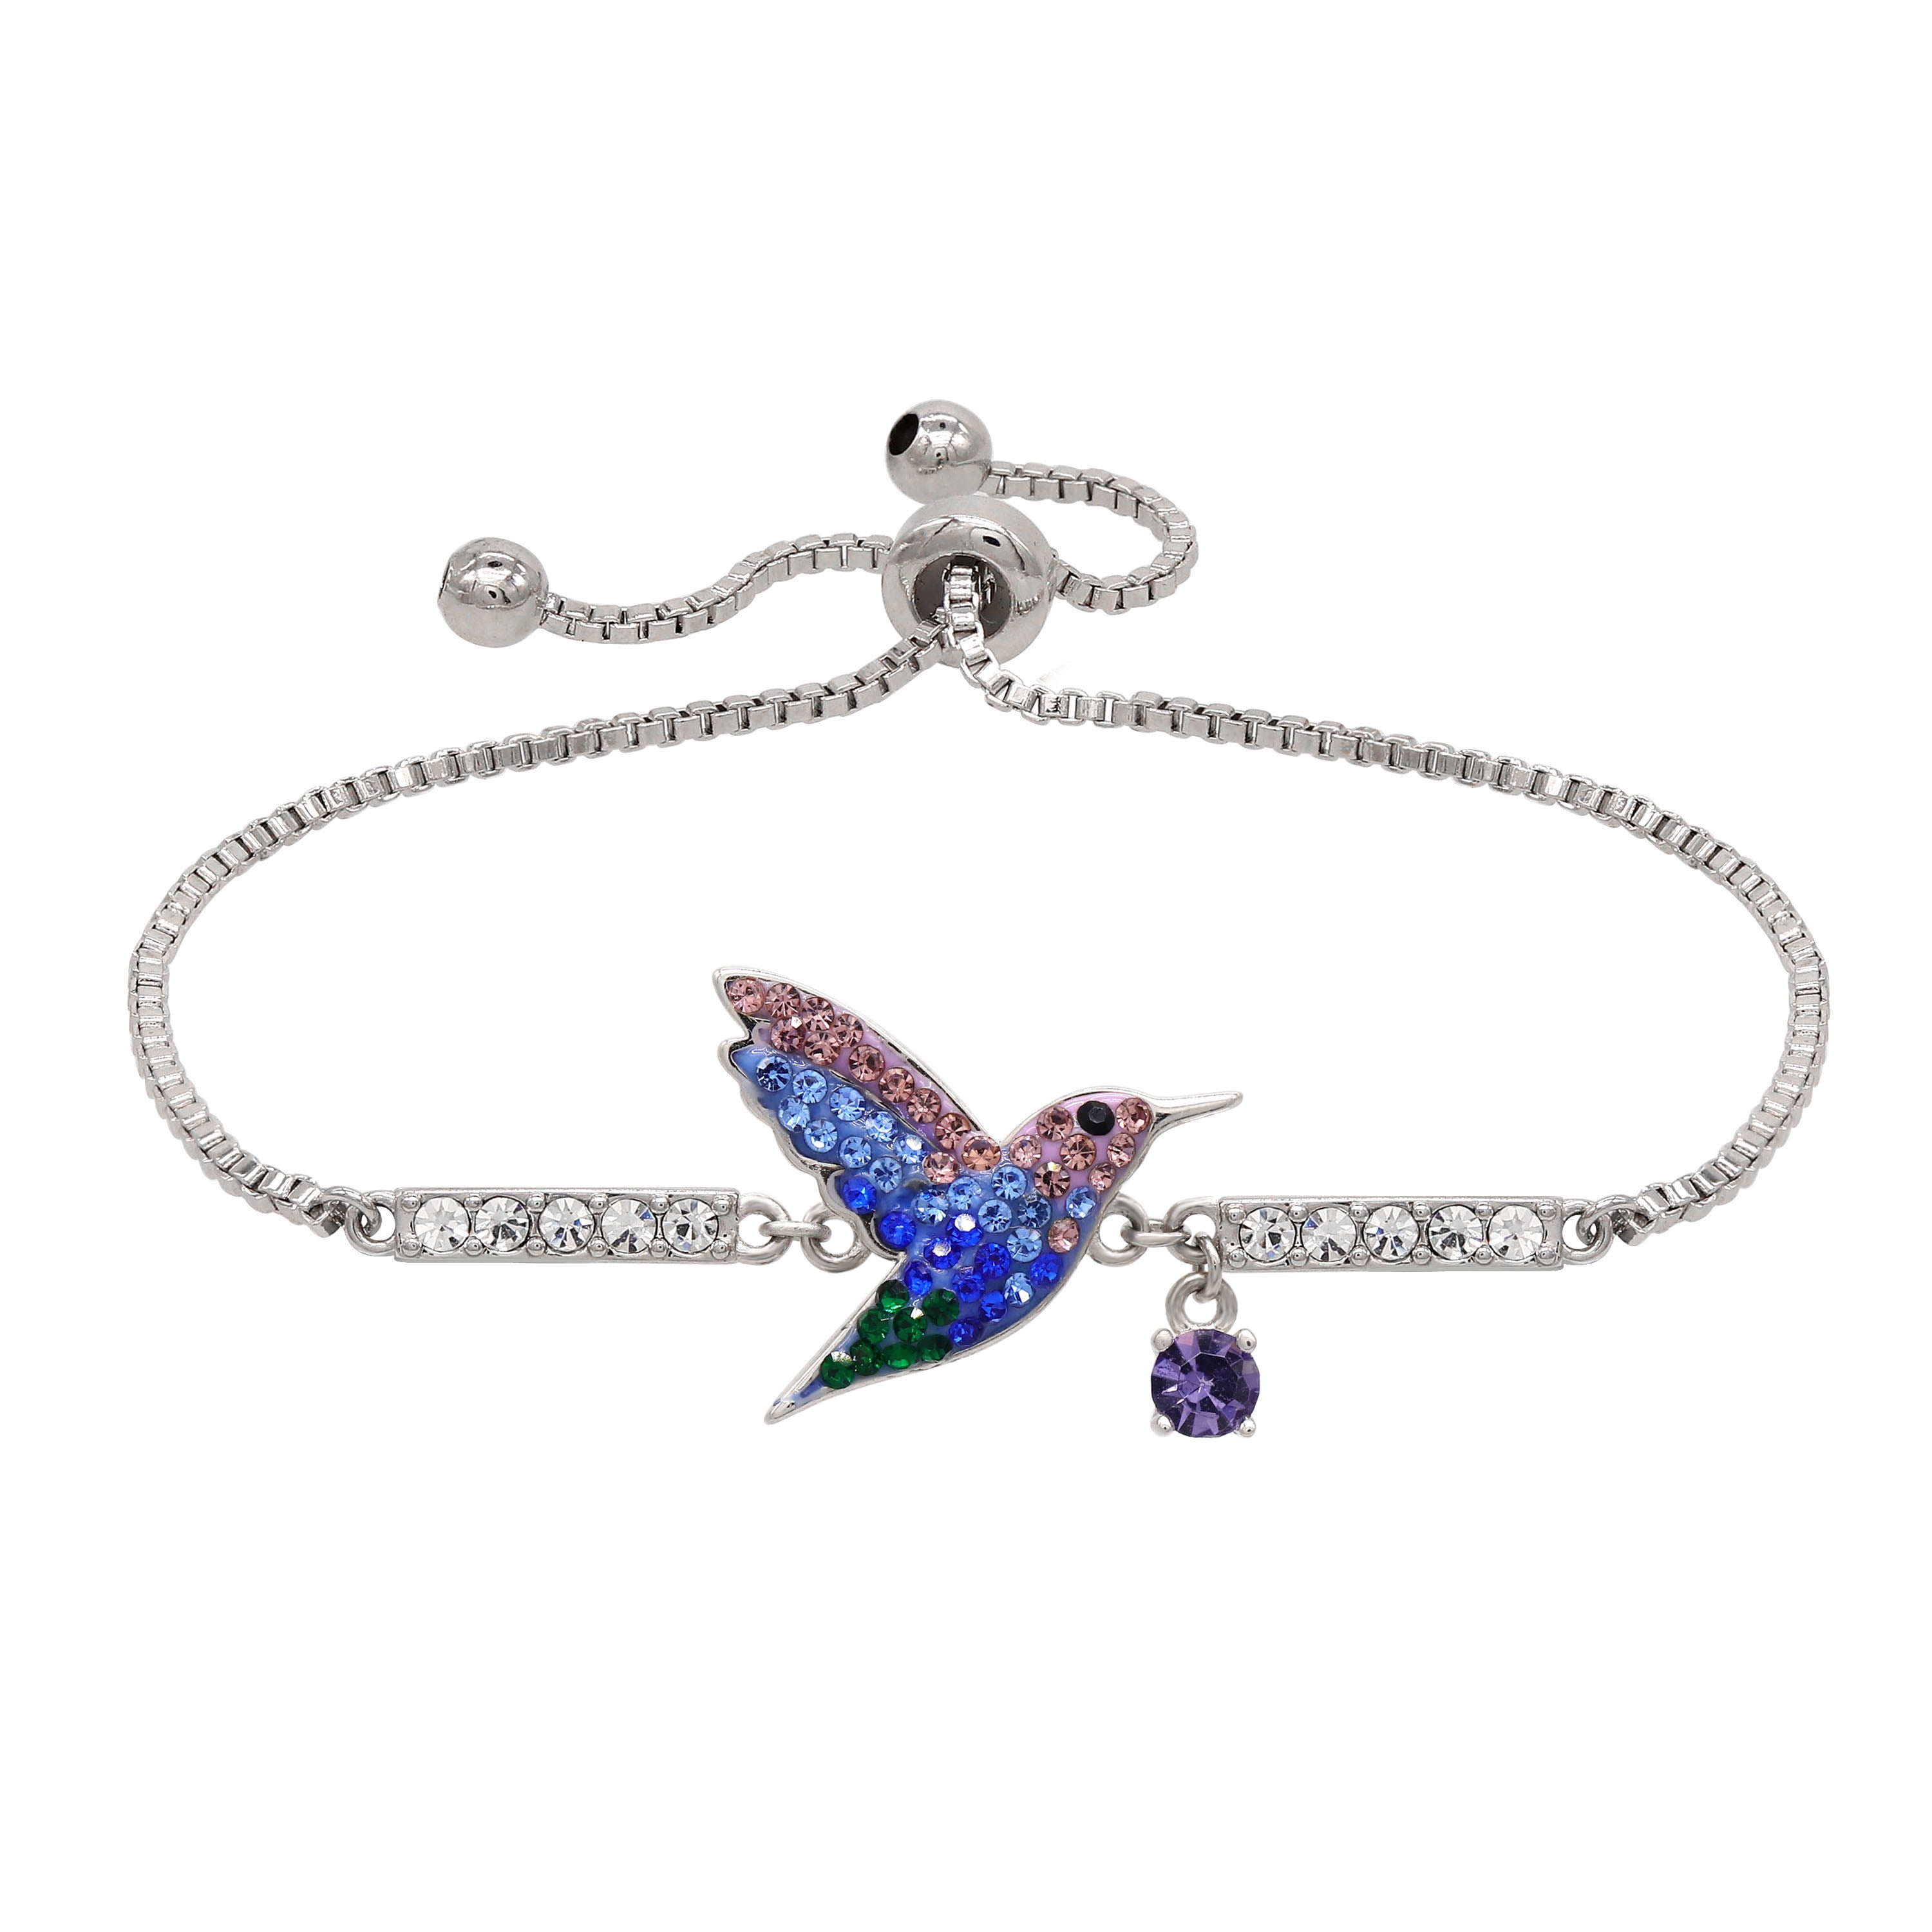 Dragonfly bracelet,String bracelet,Thread bracelet,Minimalist bracelet with charm,Adjustable water resistant Dragonfly string bracelet.